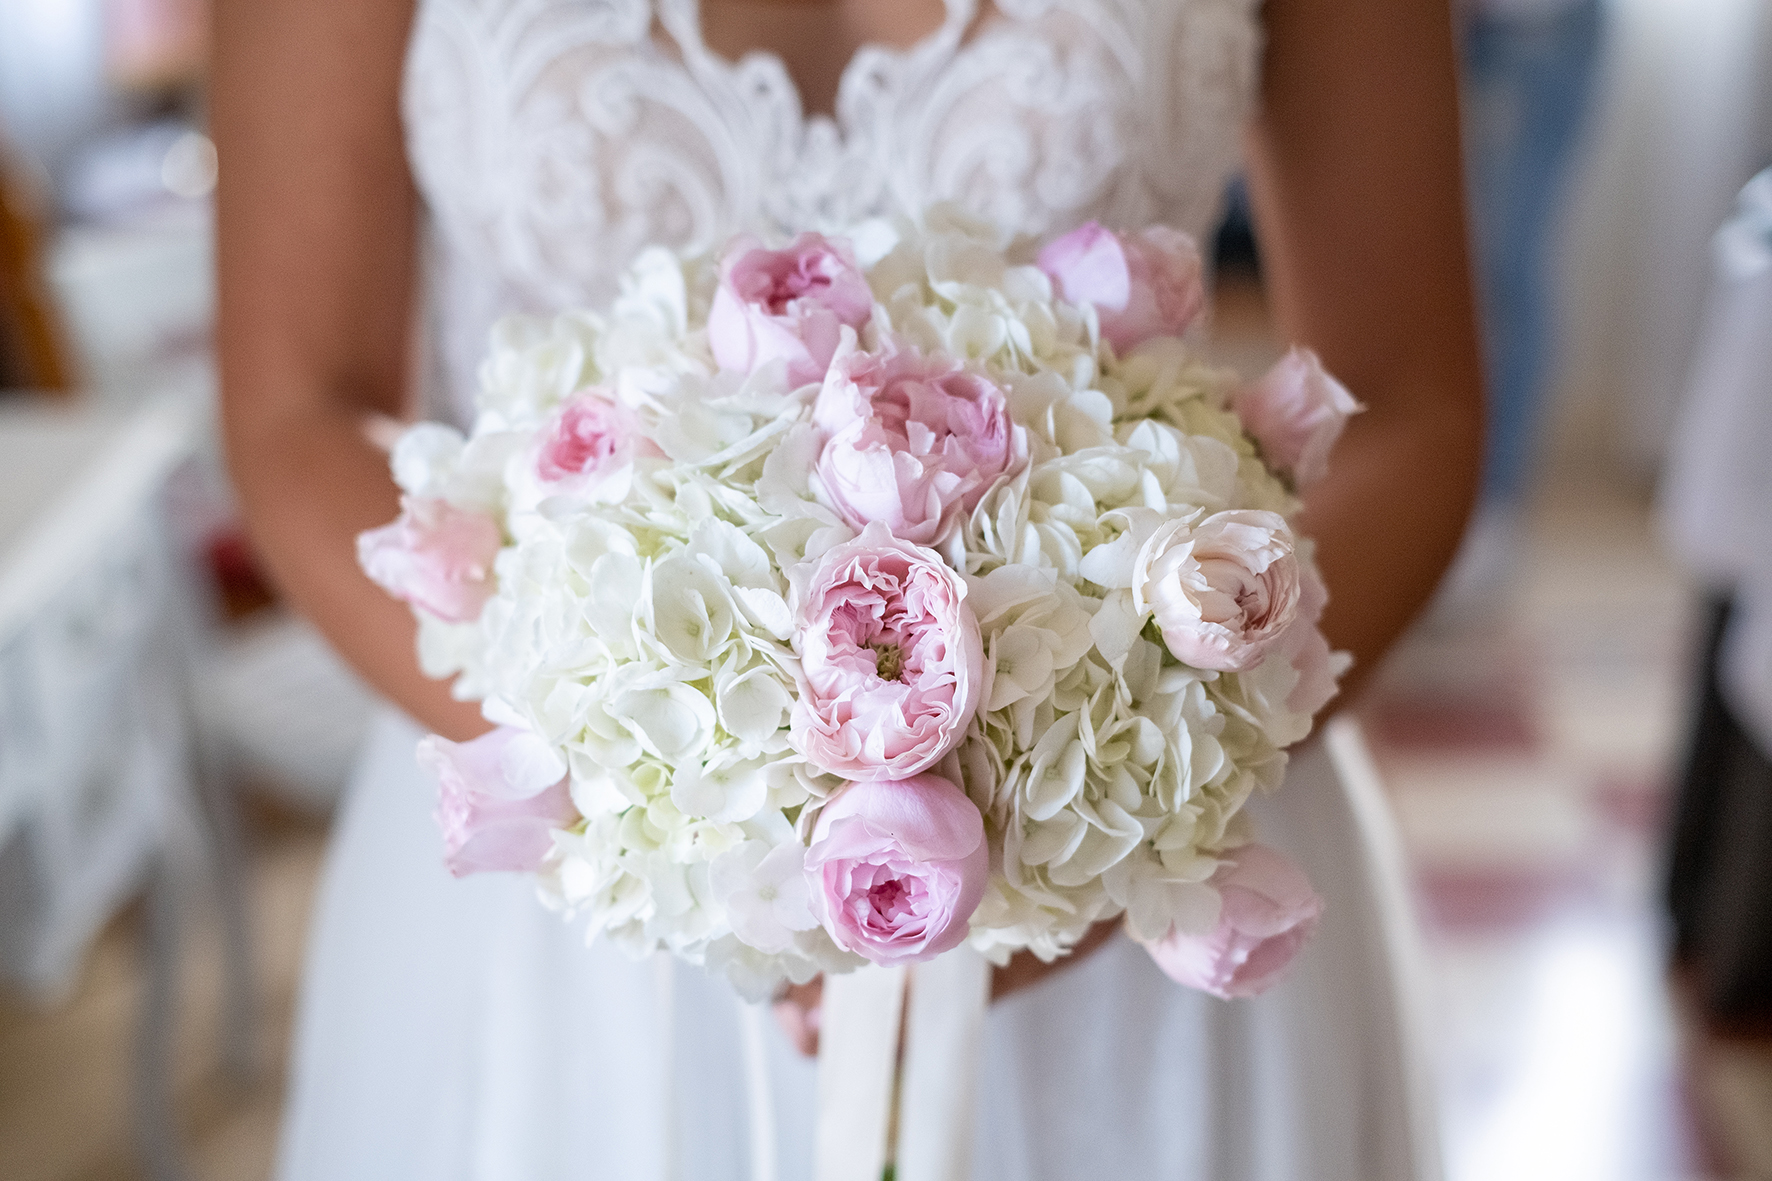 bouquet sposa originale rose inglesi e ortensie bianche